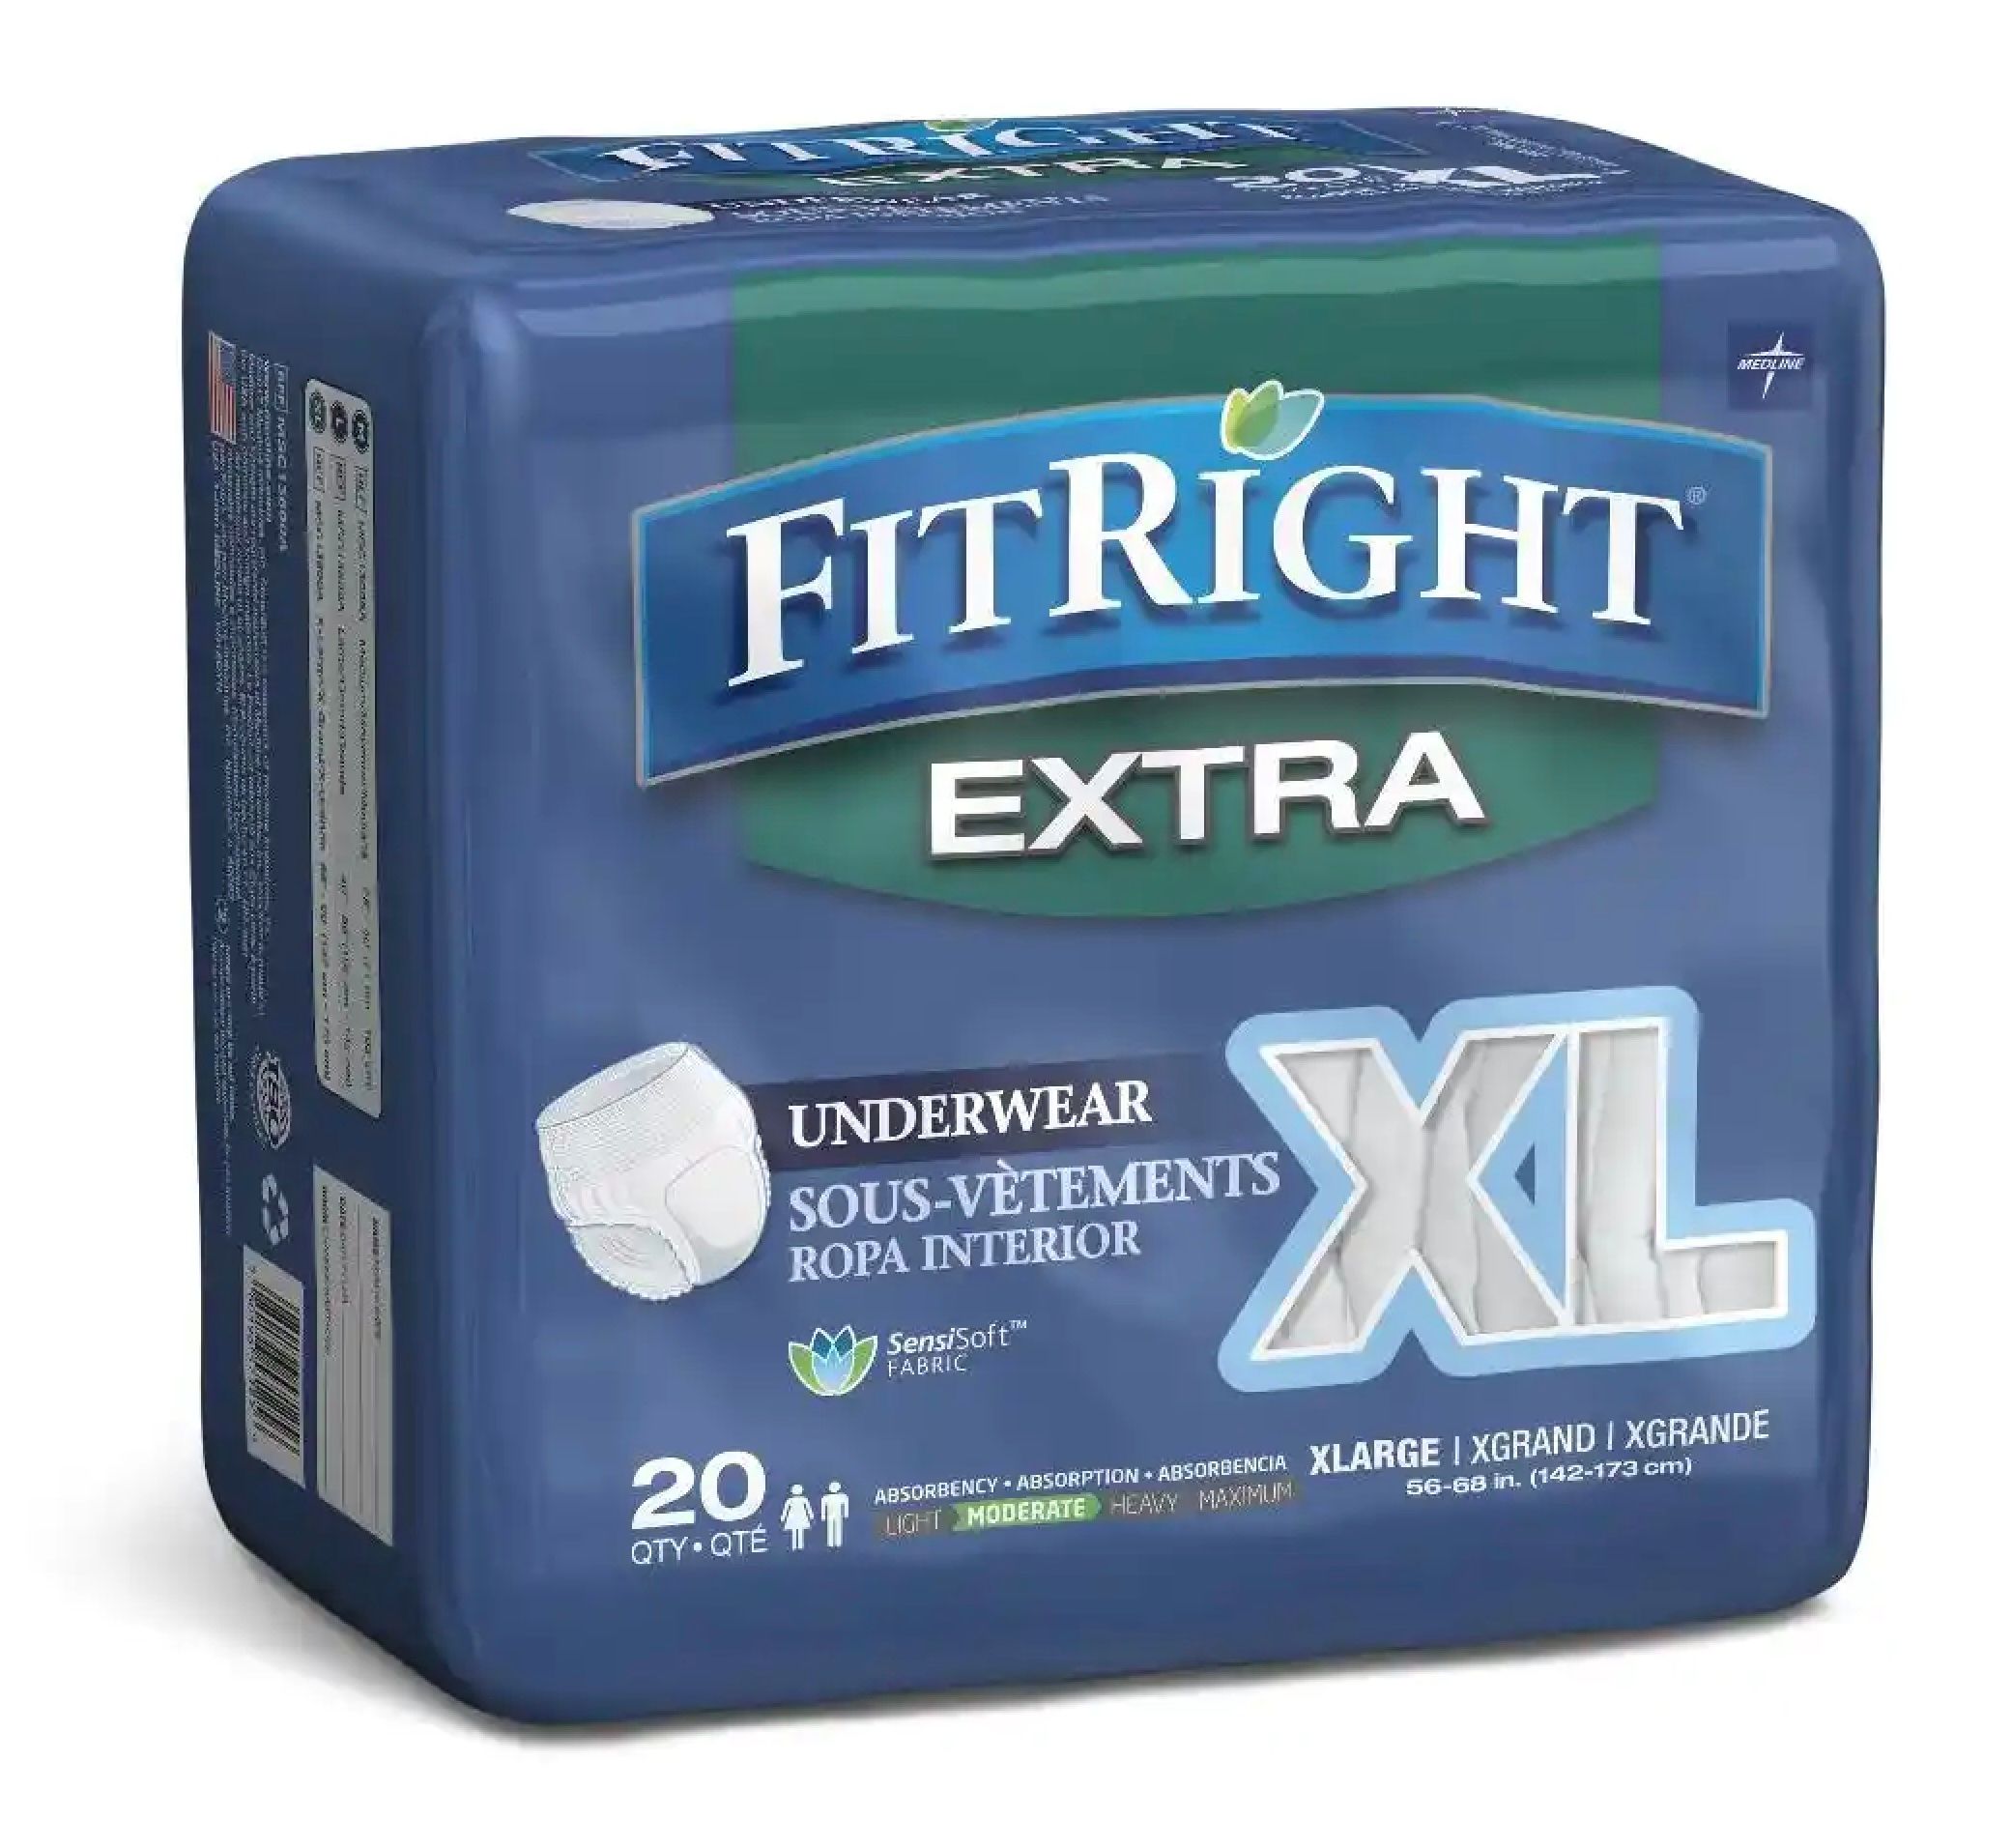 DISCFitRight Extra Protective Underwear, XL - 20 ct